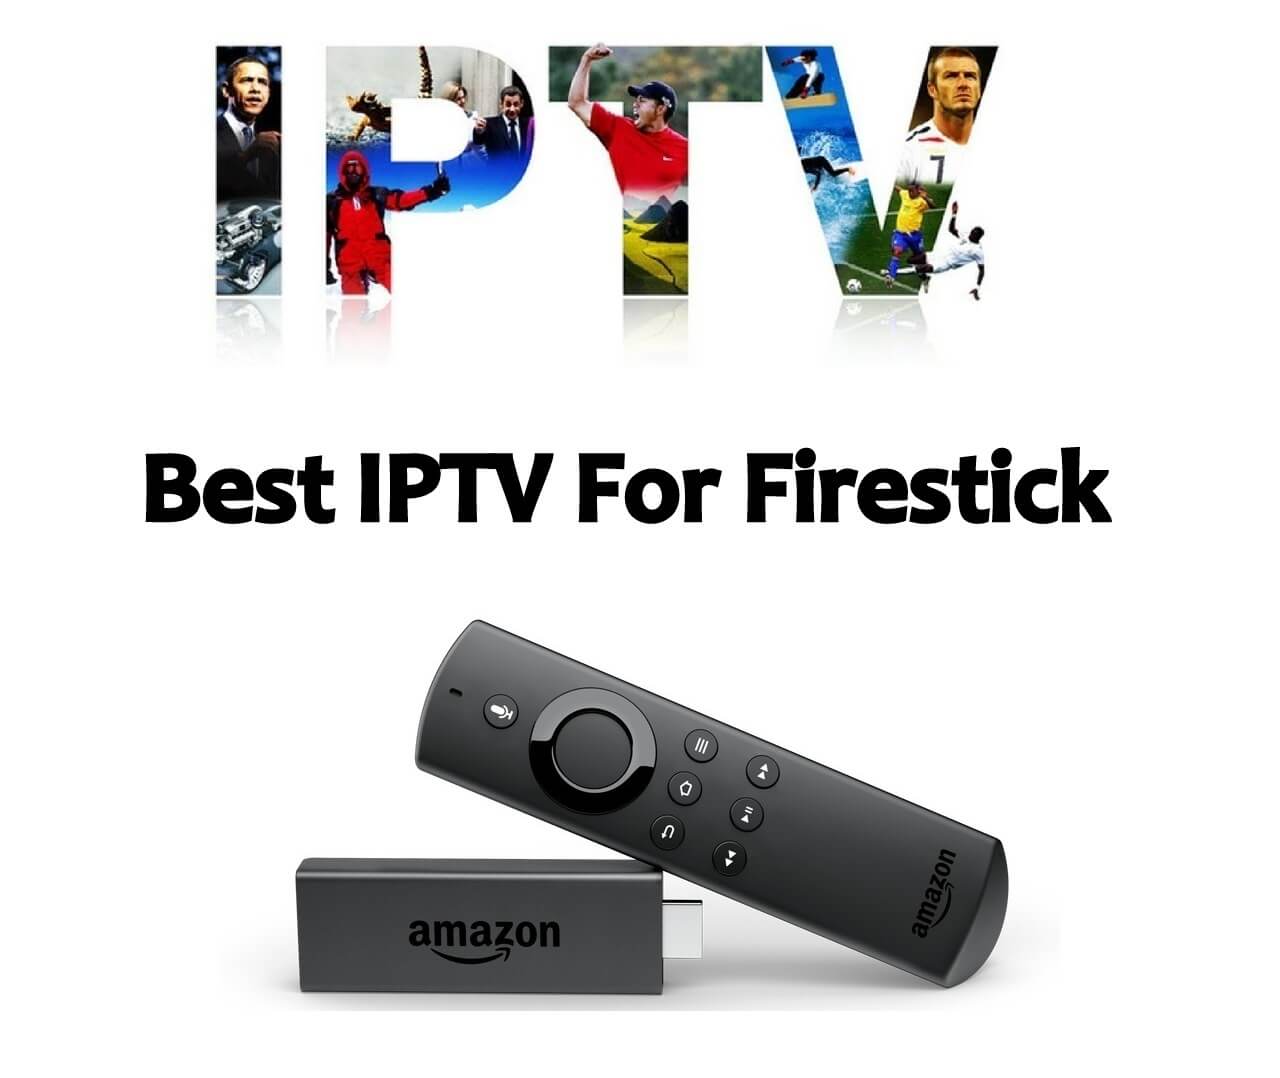 9 Best IPTV for Firestick / Fire TV [January 2021]